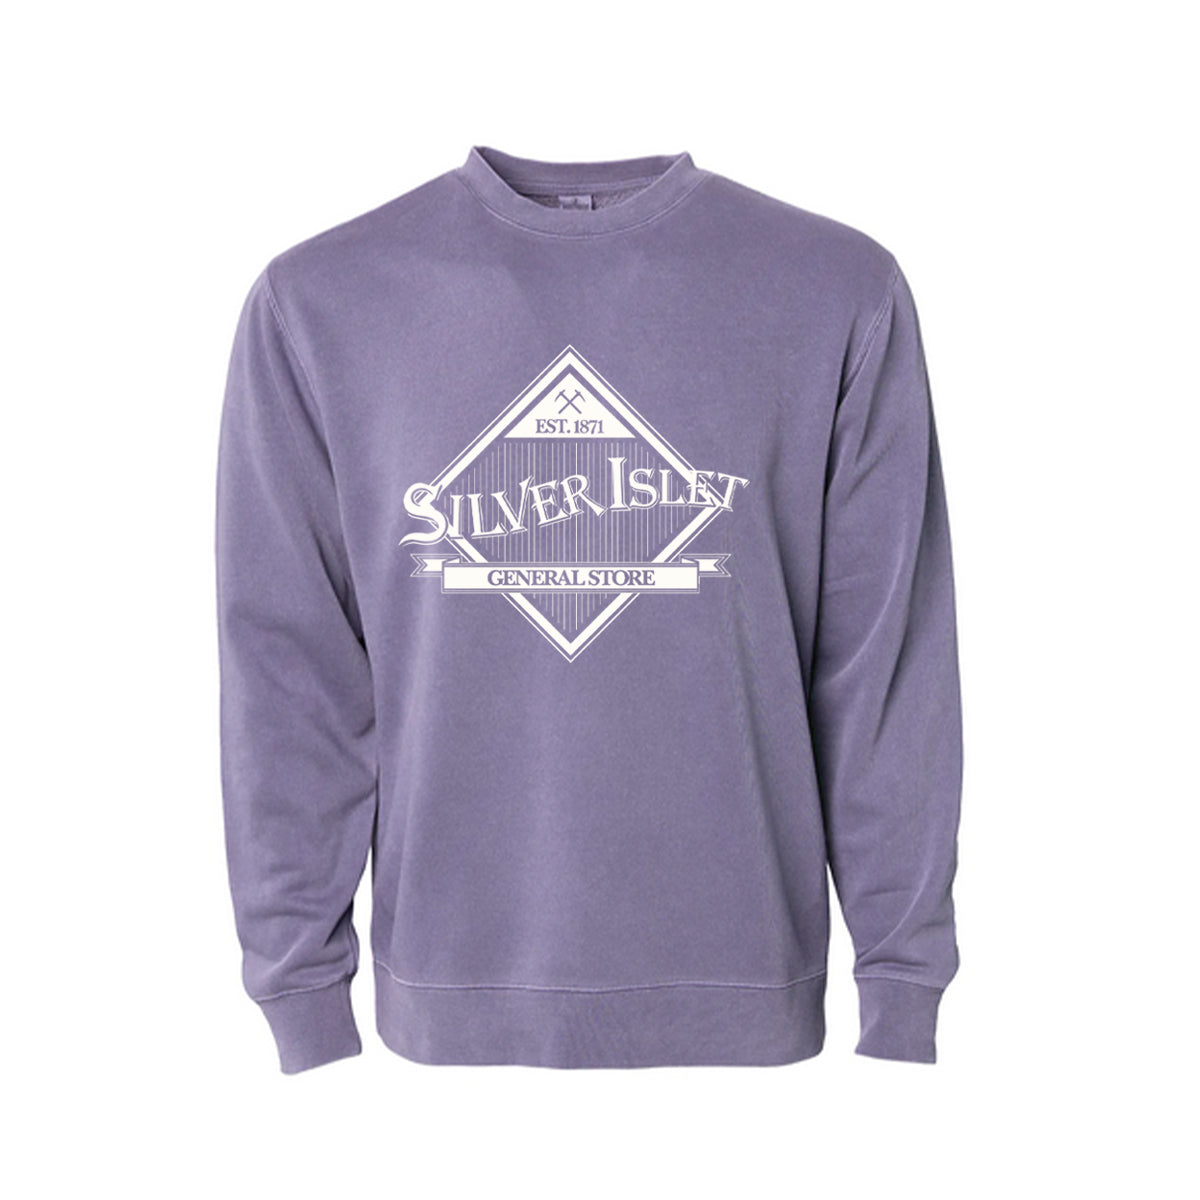 Original Crew Sweatshirt - Silver Islet General Store